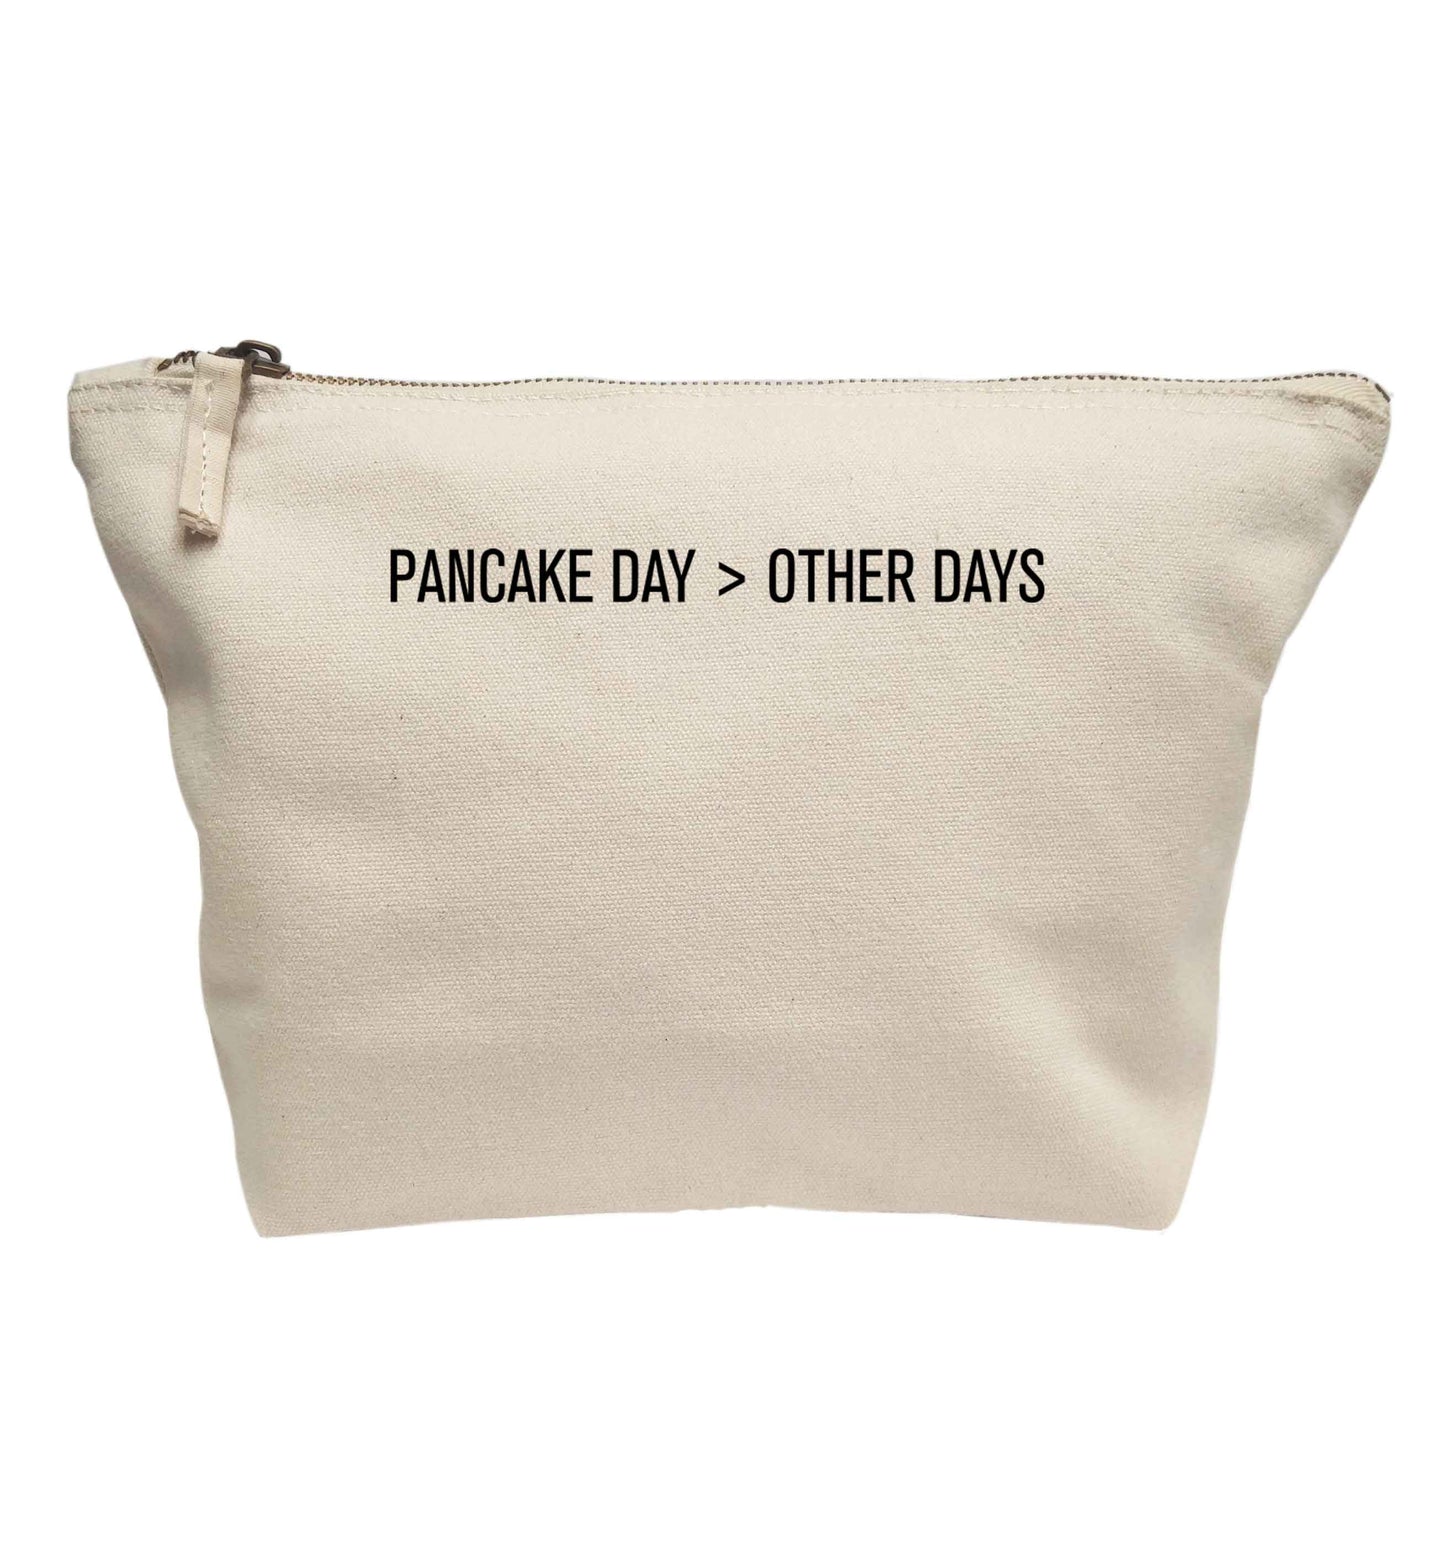 Pancake day > other days | Makeup / wash bag